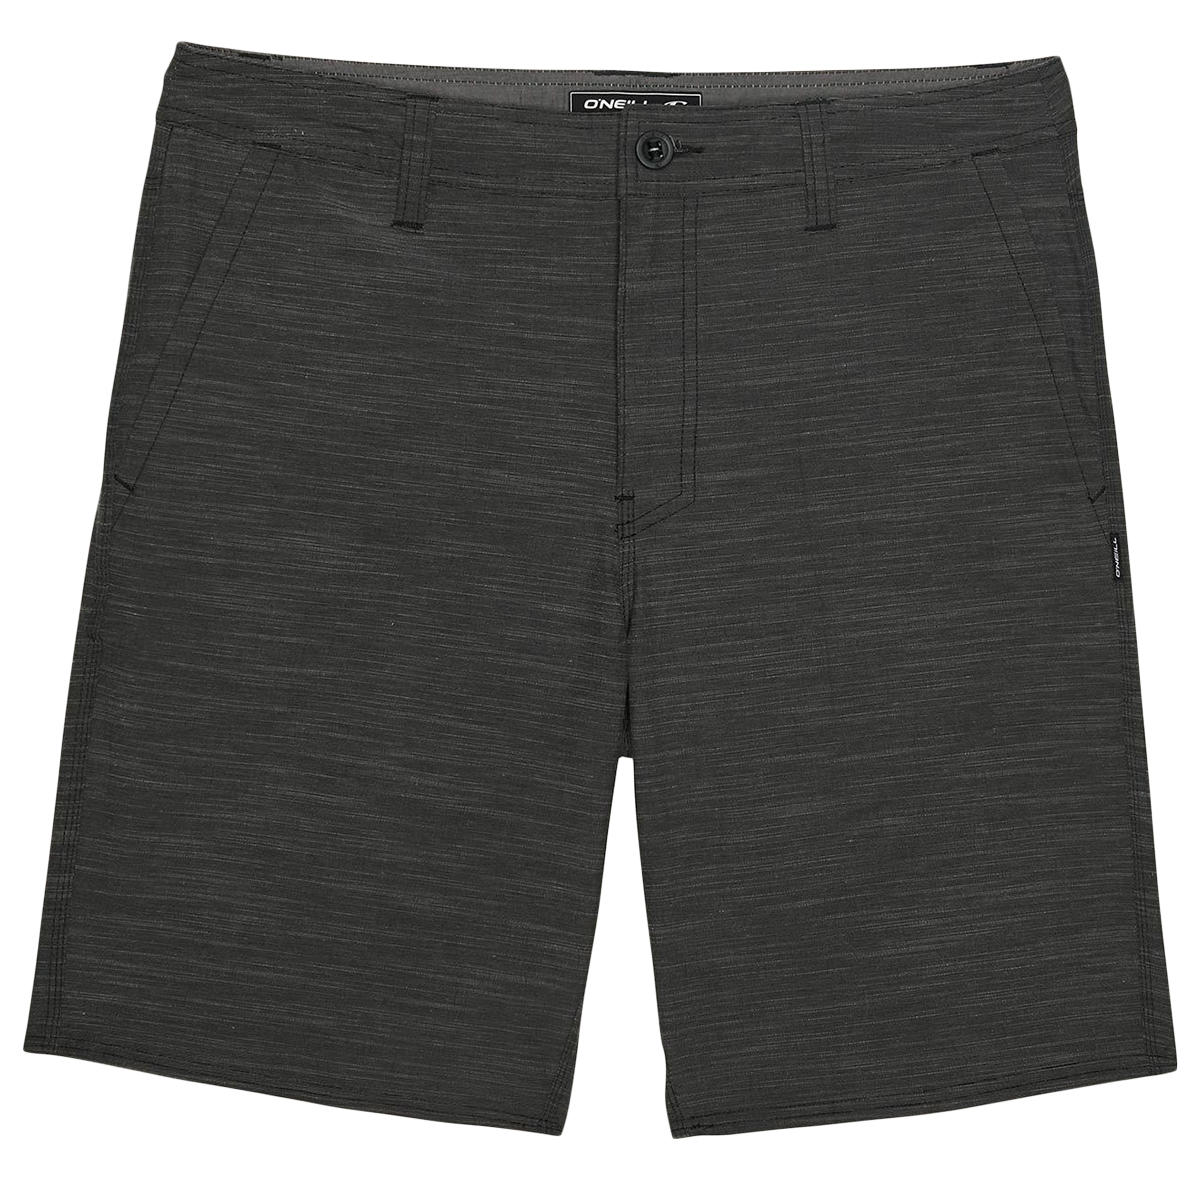 O'neill Men's Locked Slub Shorts - Black, 34